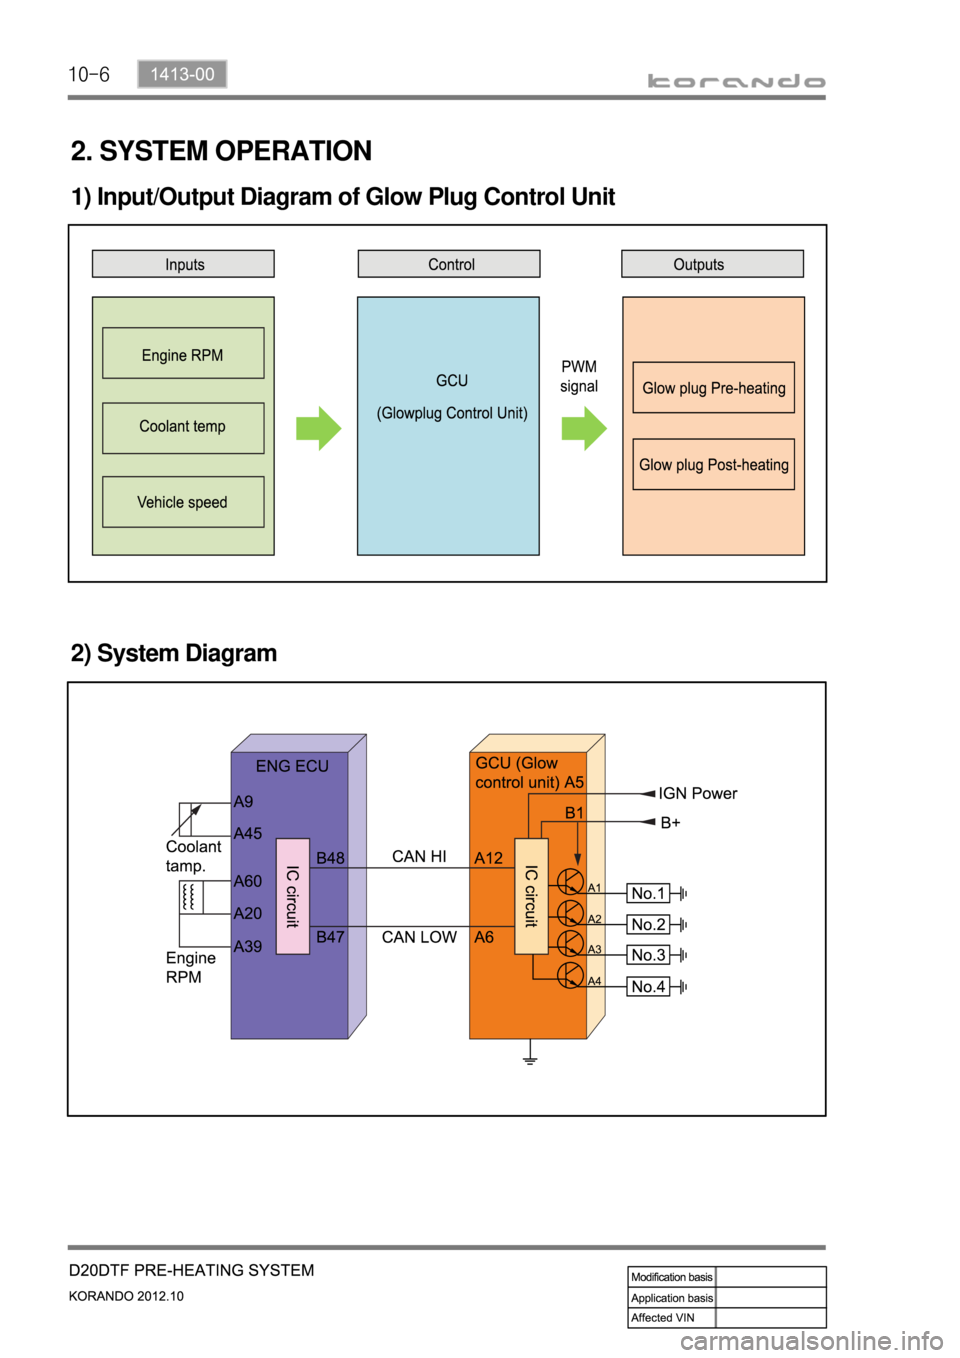 SSANGYONG KORANDO 2012  Service Manual 10-6
2. SYSTEM OPERATION
1) Input/Output Diagram of Glow Plug Control Unit
2) System Diagram 